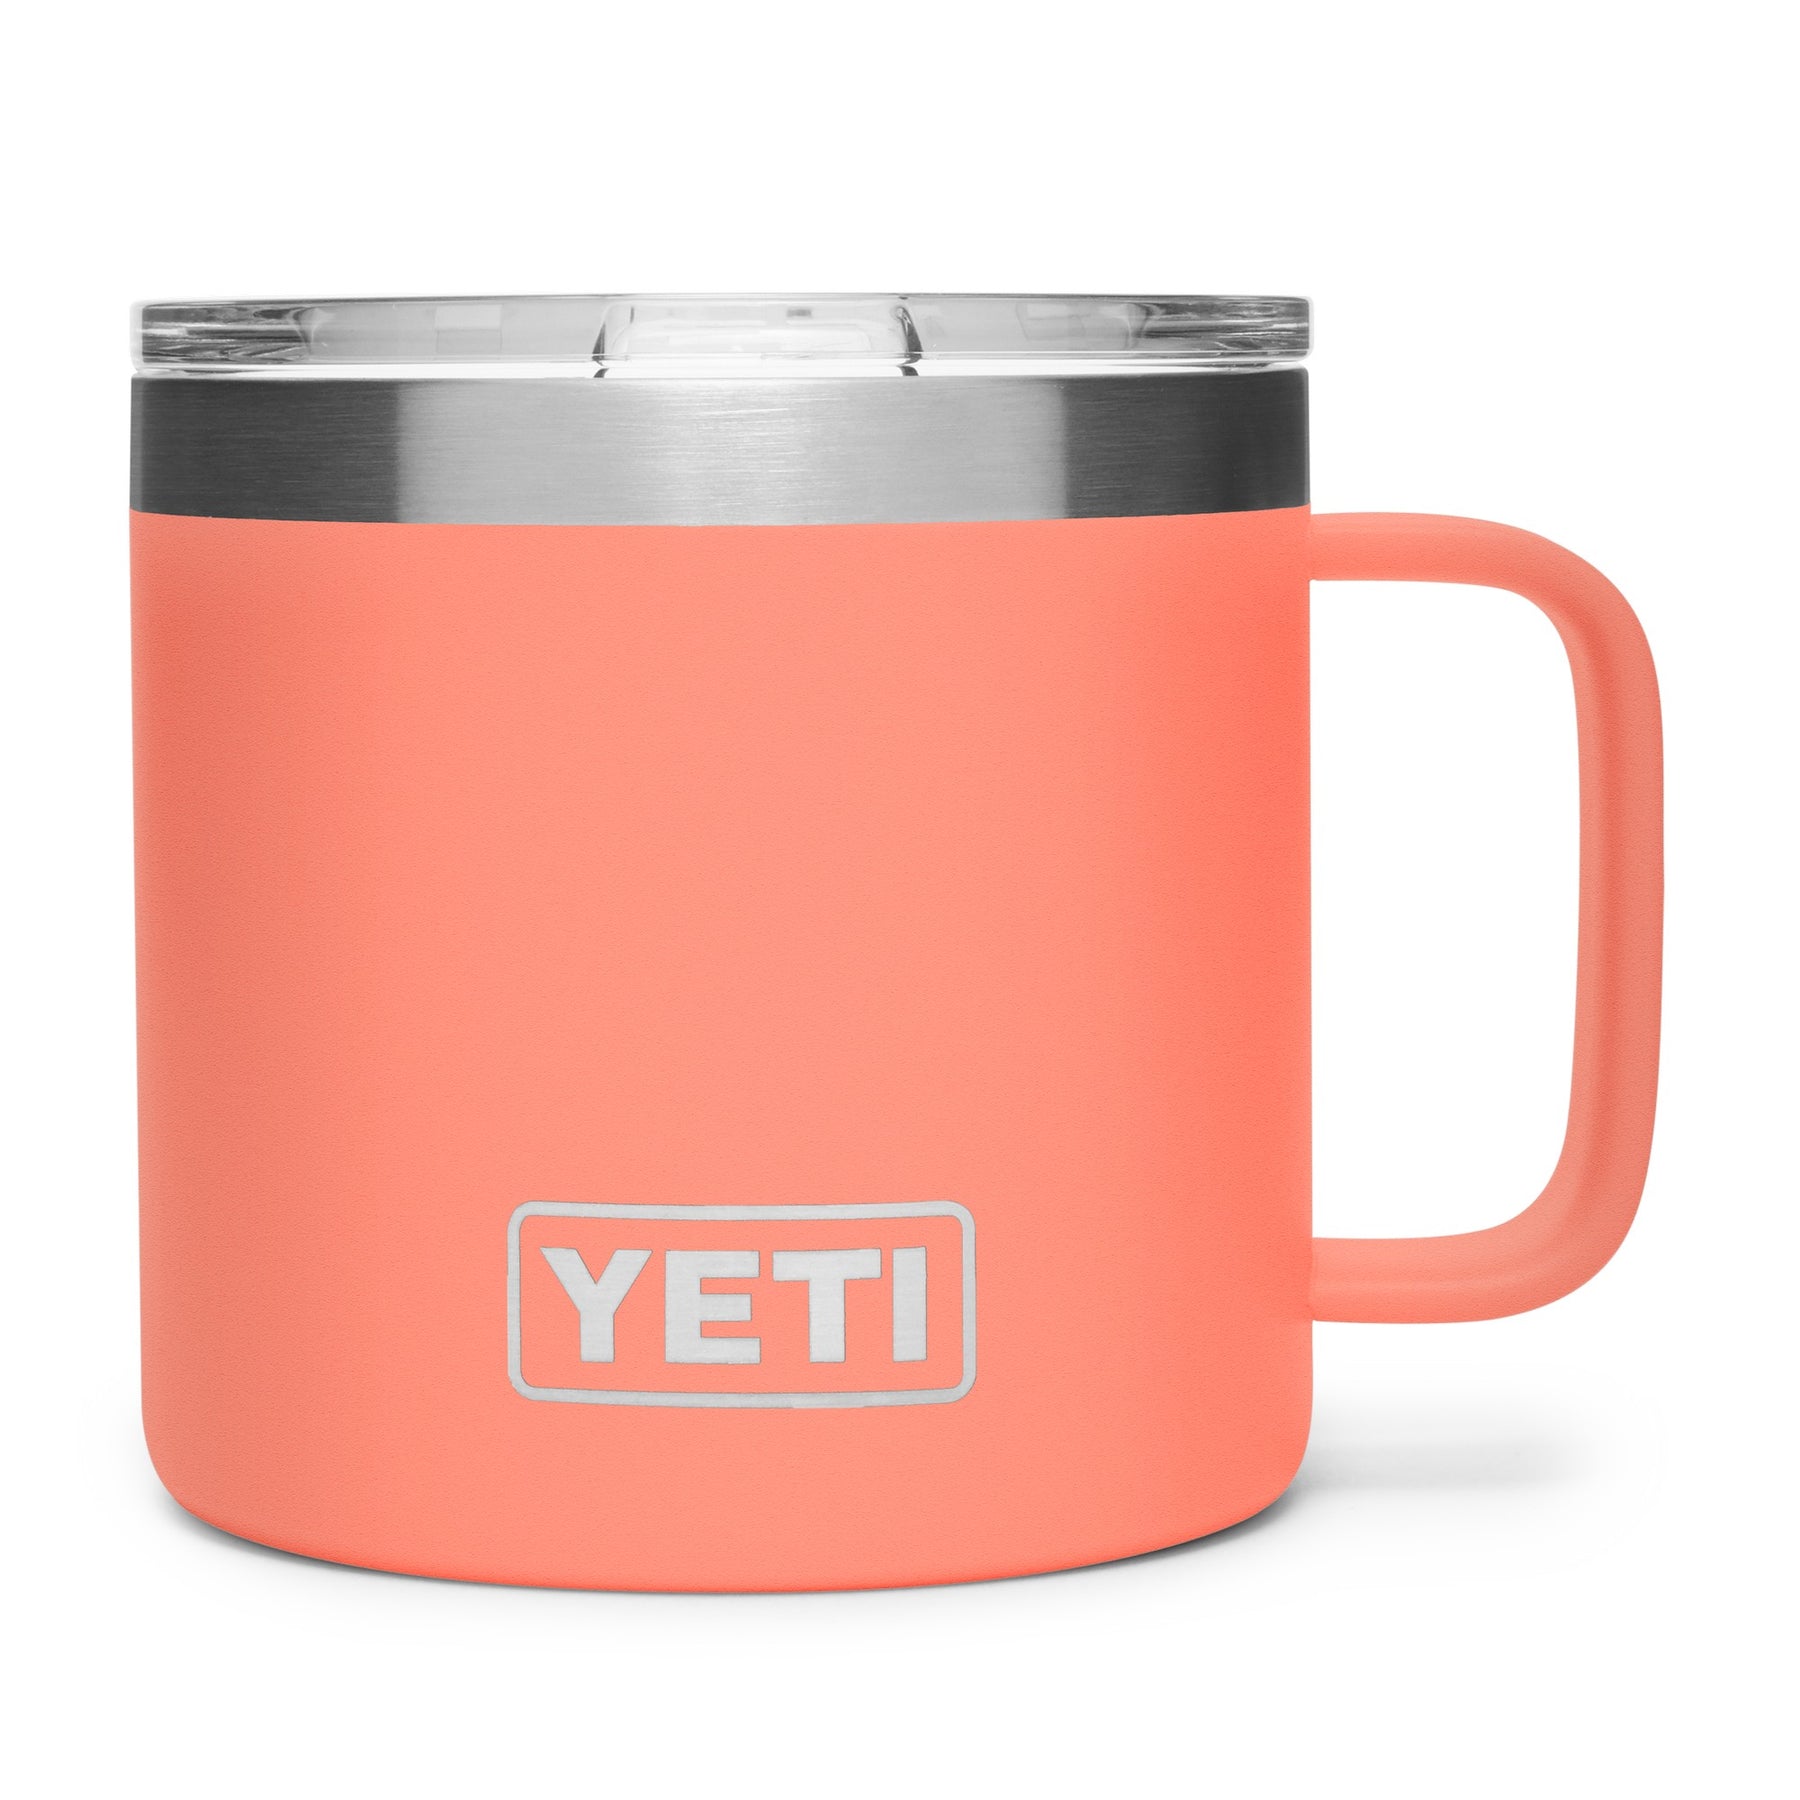 On The Slopes: Yeti products